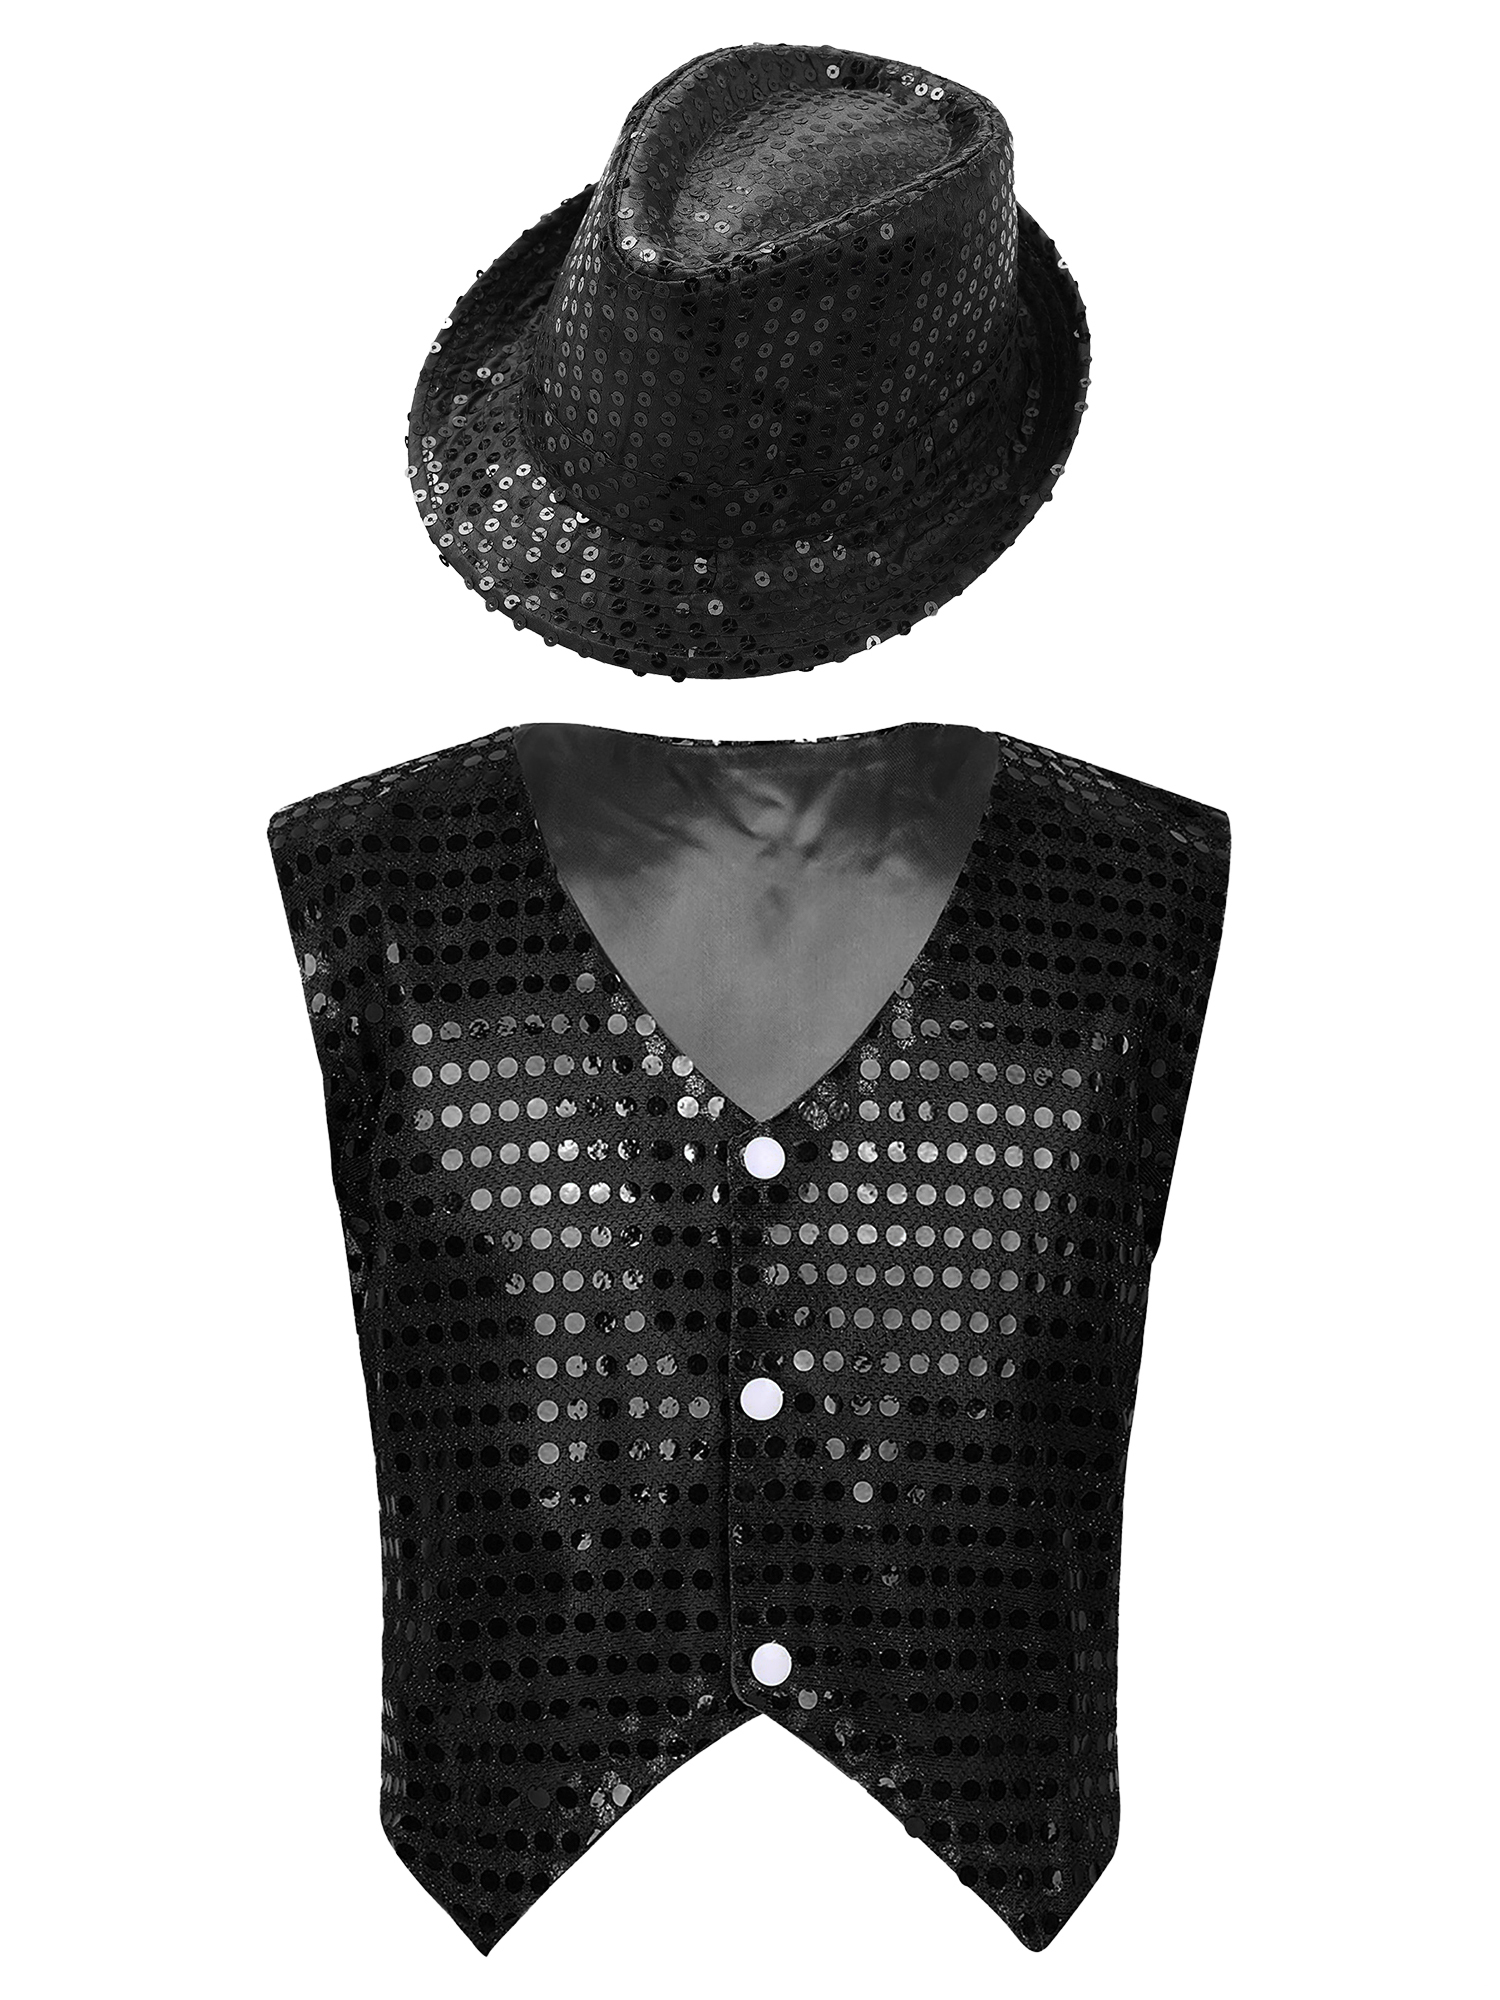 IEFIEL Kids Boys Sparkle Sequins Button Down Vest with Hat Dance Outfit Set Hip Hop Jazz Stage Performance Costume Black 13-14 - image 1 of 7